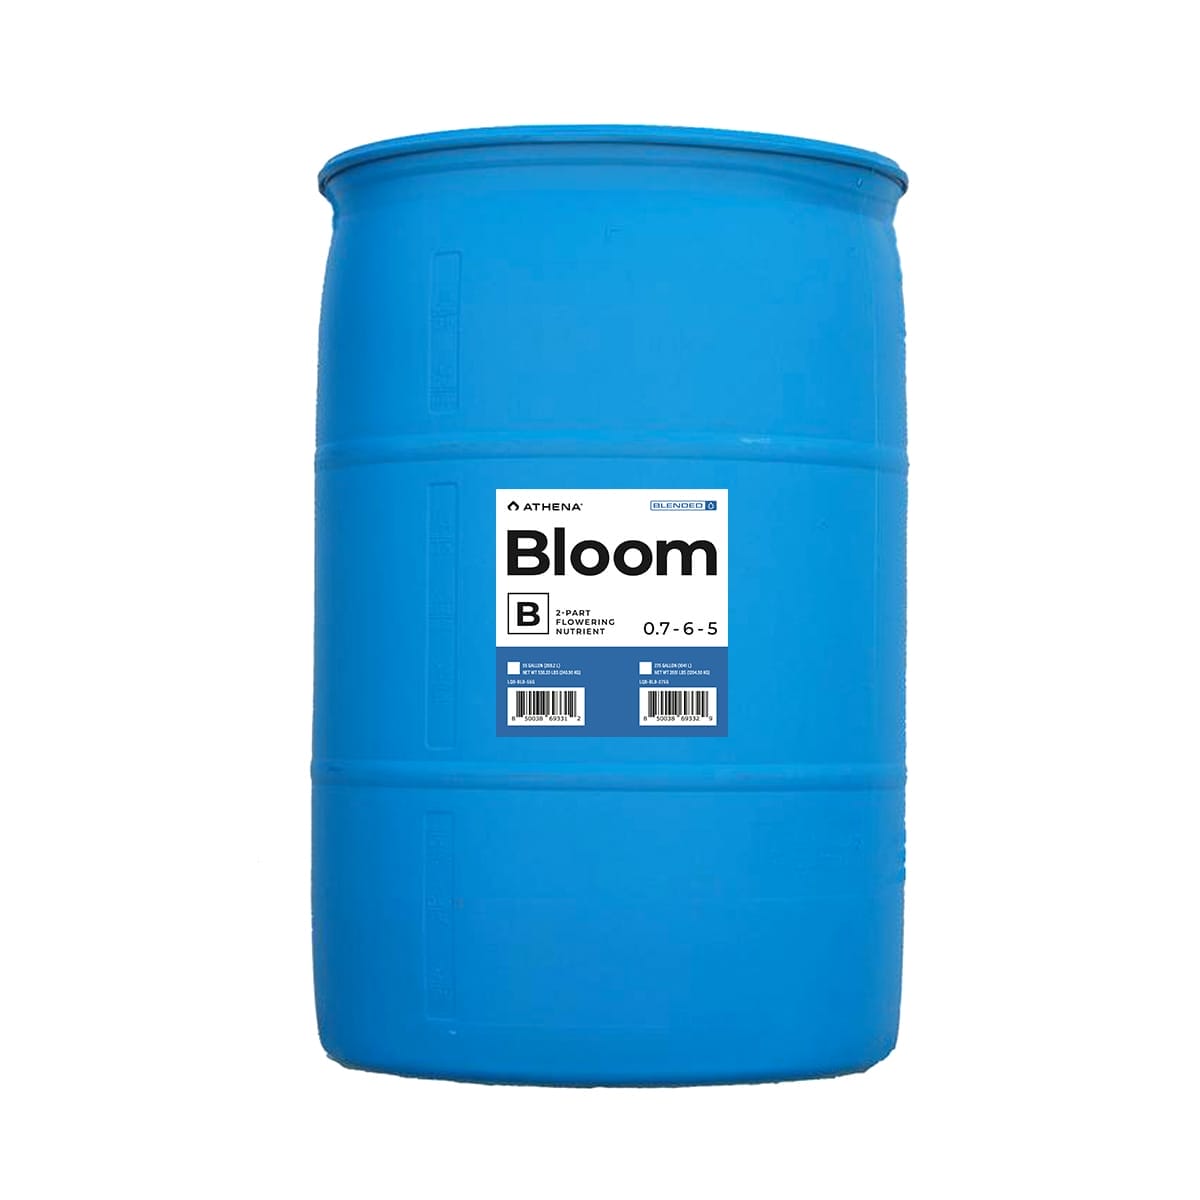 New Athena Bloom B 55 Gallon